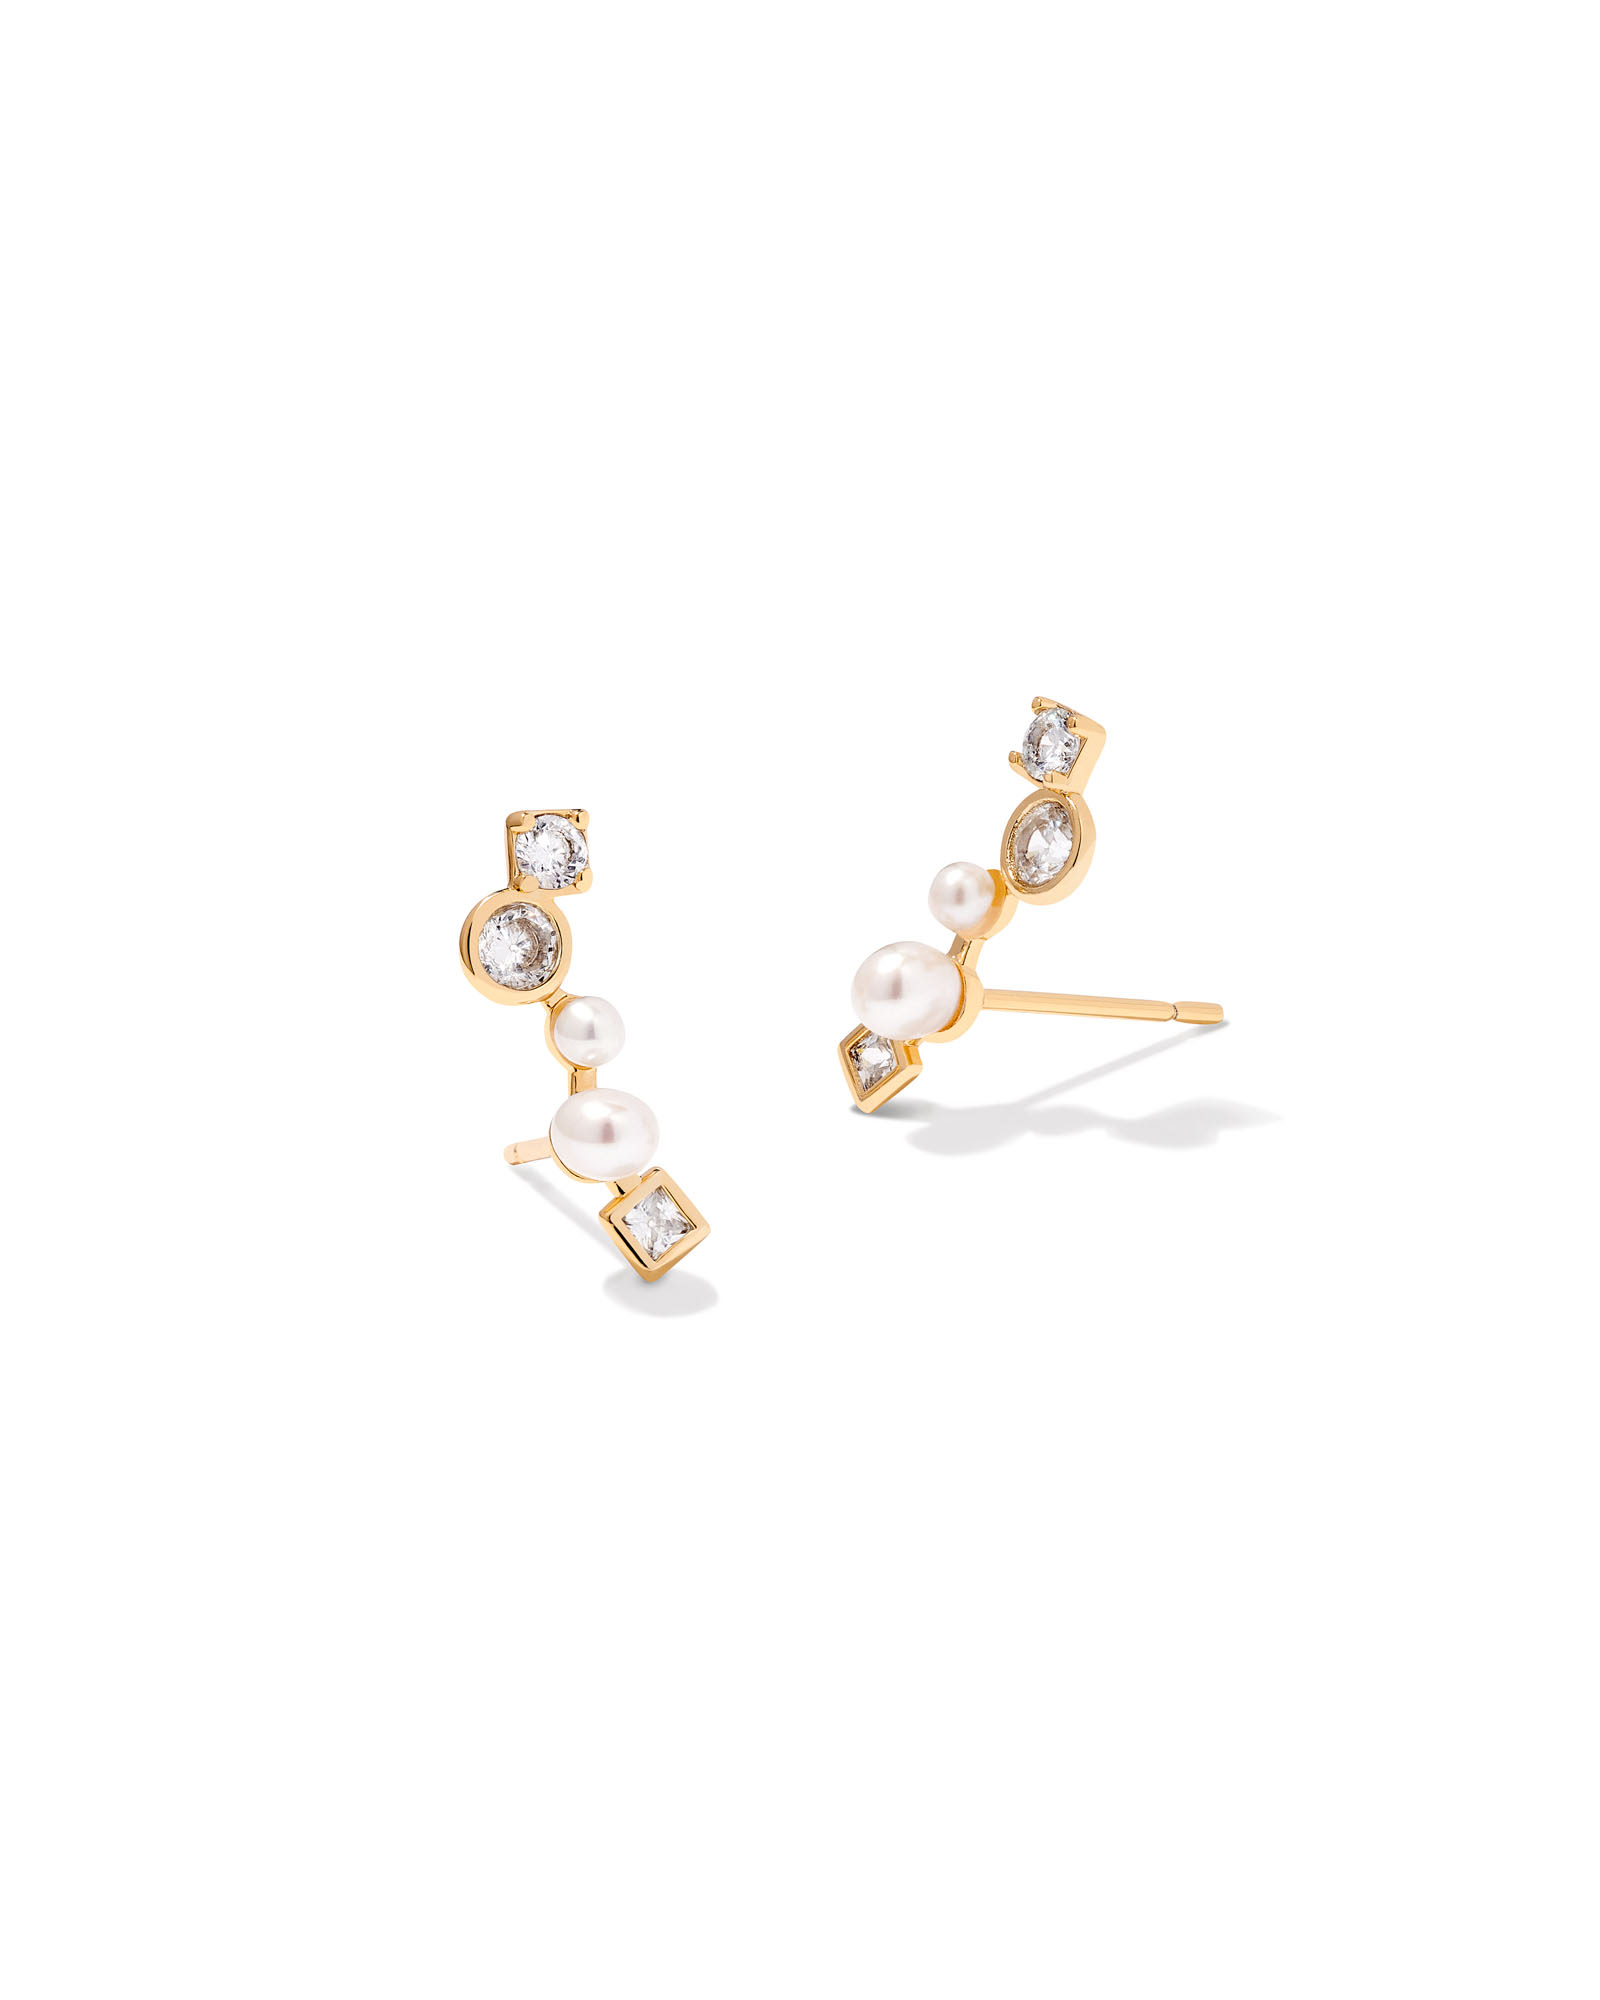 Leighton Gold Pearl Ear Climber Earrings in White Pearl | Kendra Scott